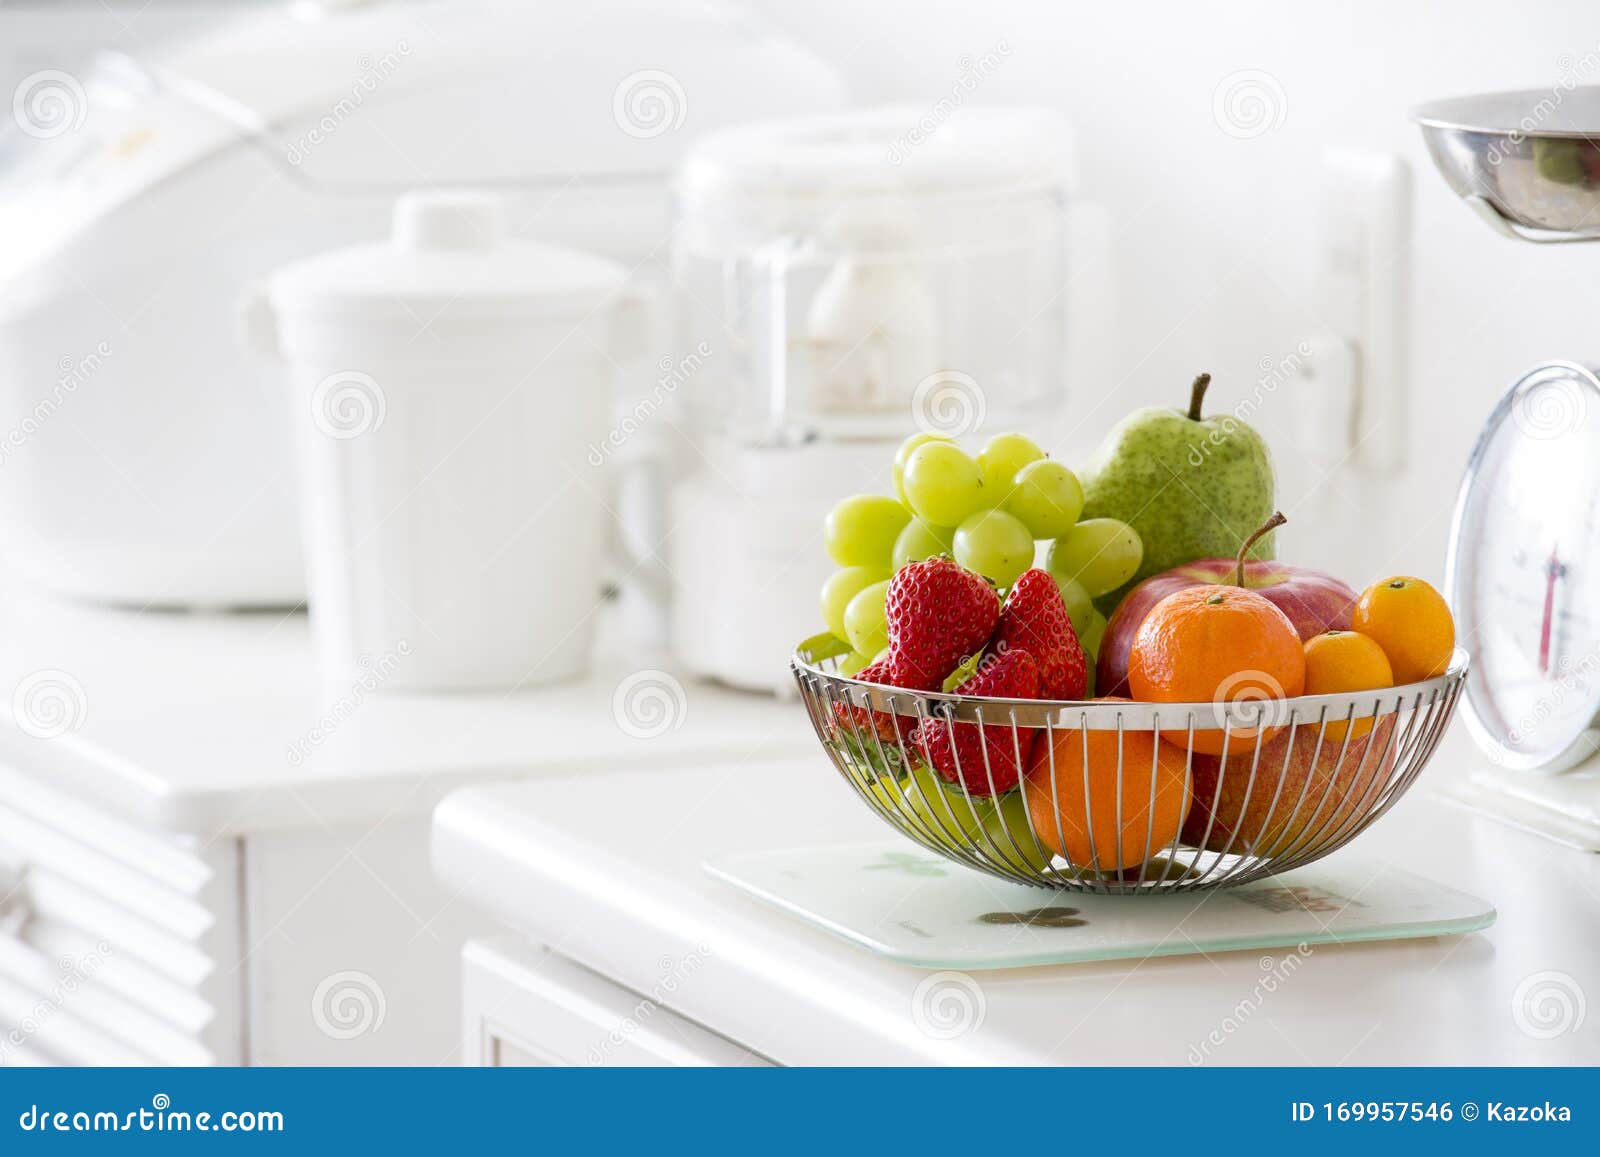 https://thumbs.dreamstime.com/z/fruit-basket-bright-kitchen-fruits-bowl-placed-white-169957546.jpg